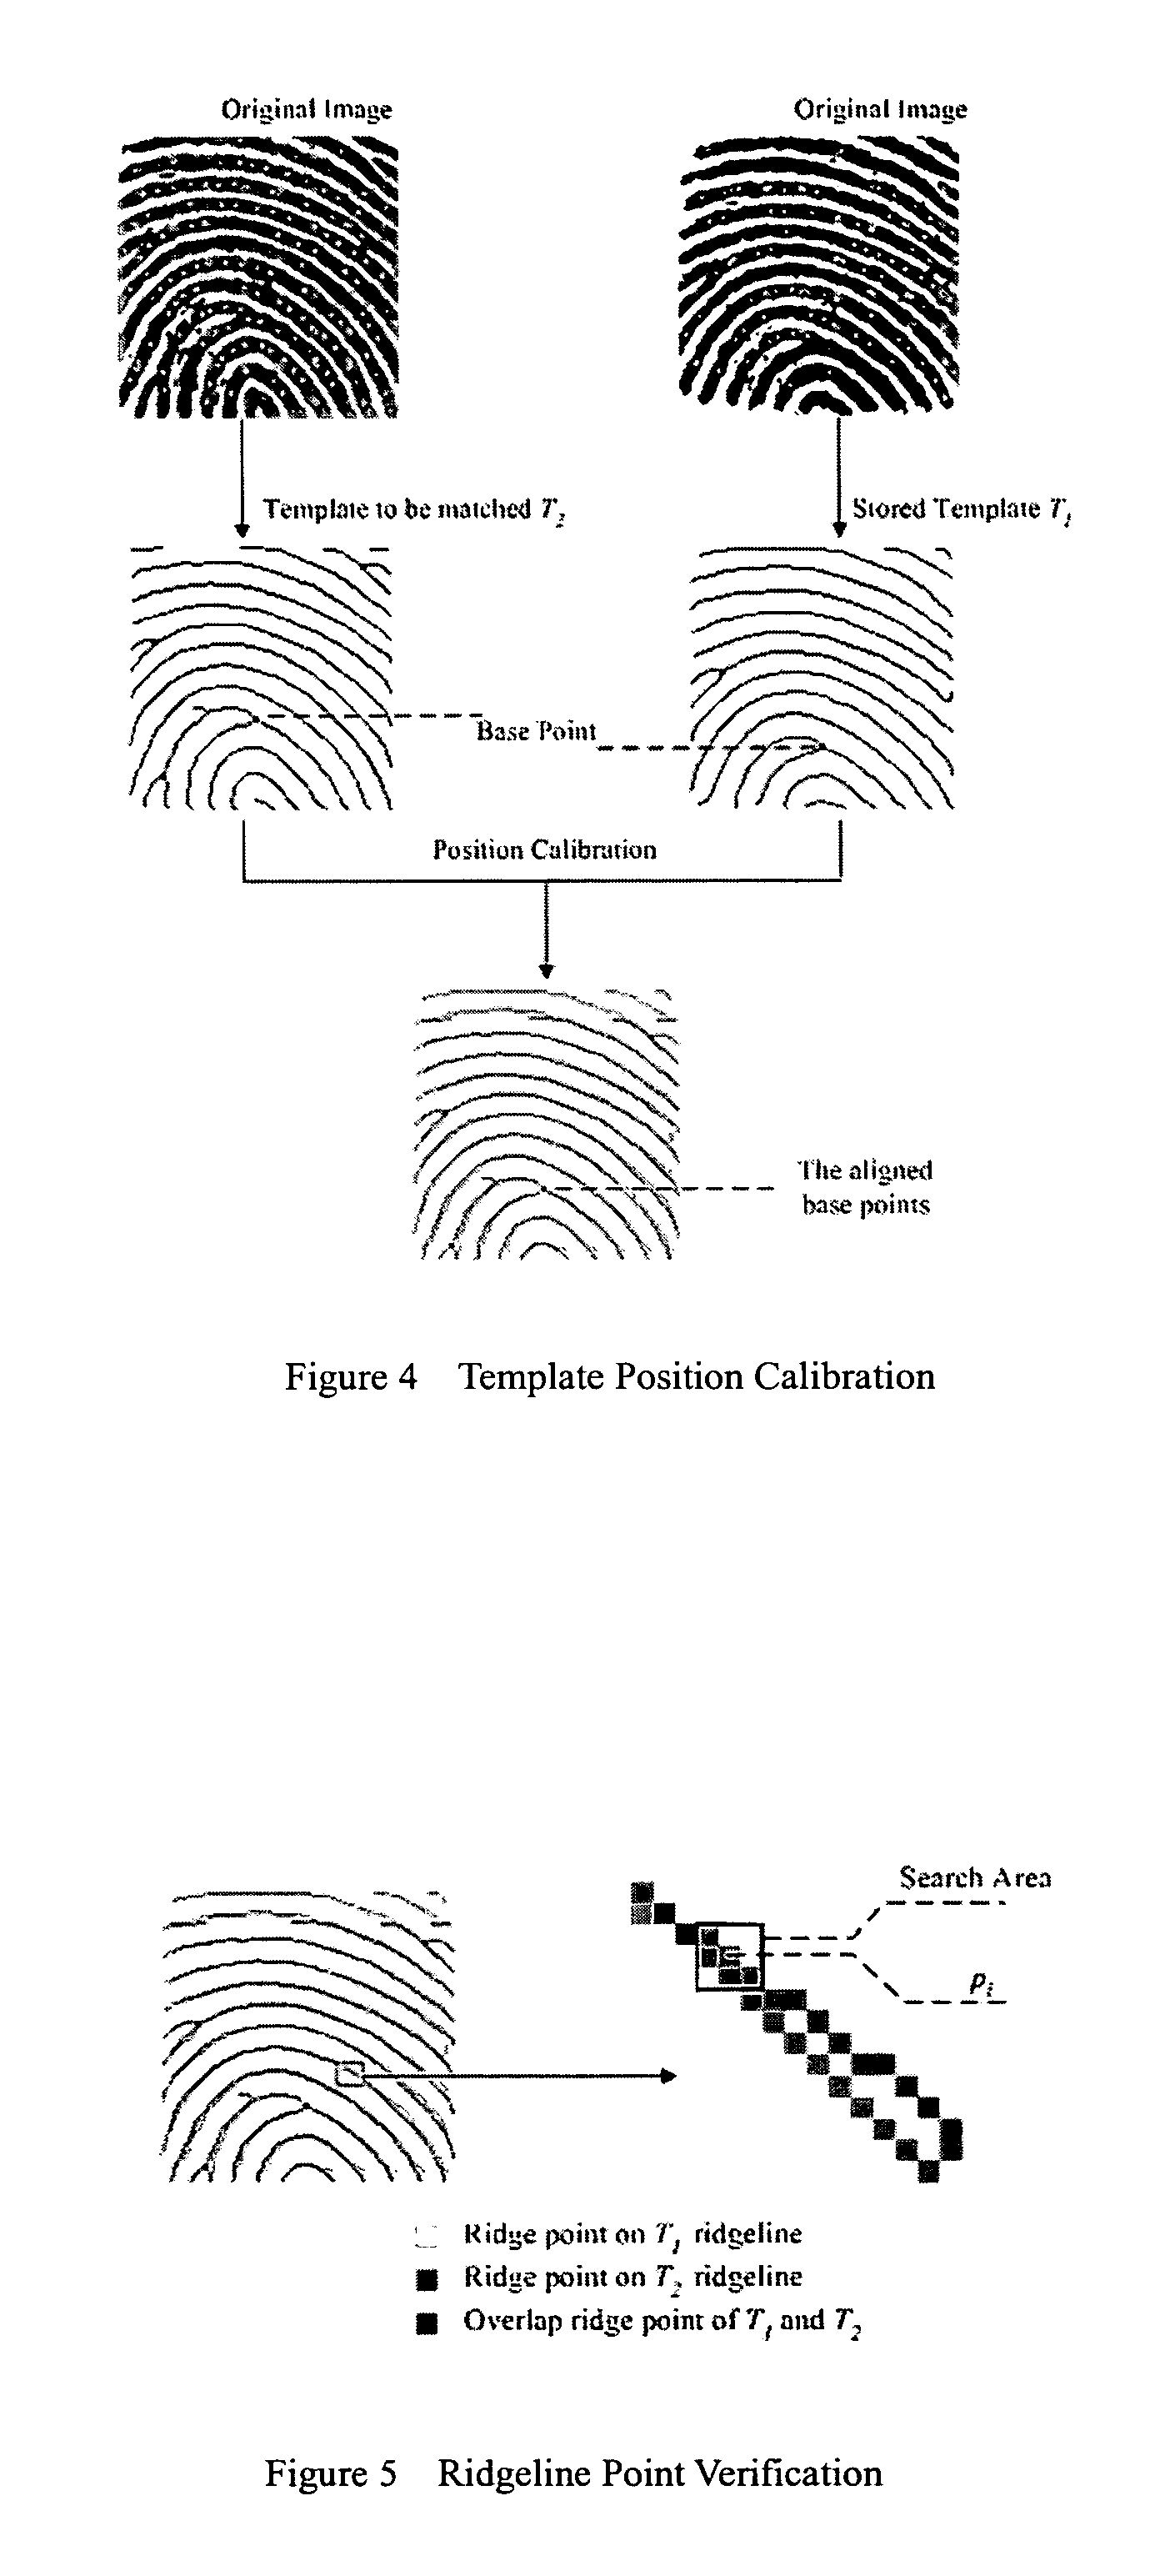 Fingerprint verification method and apparatus based on global ridgeline